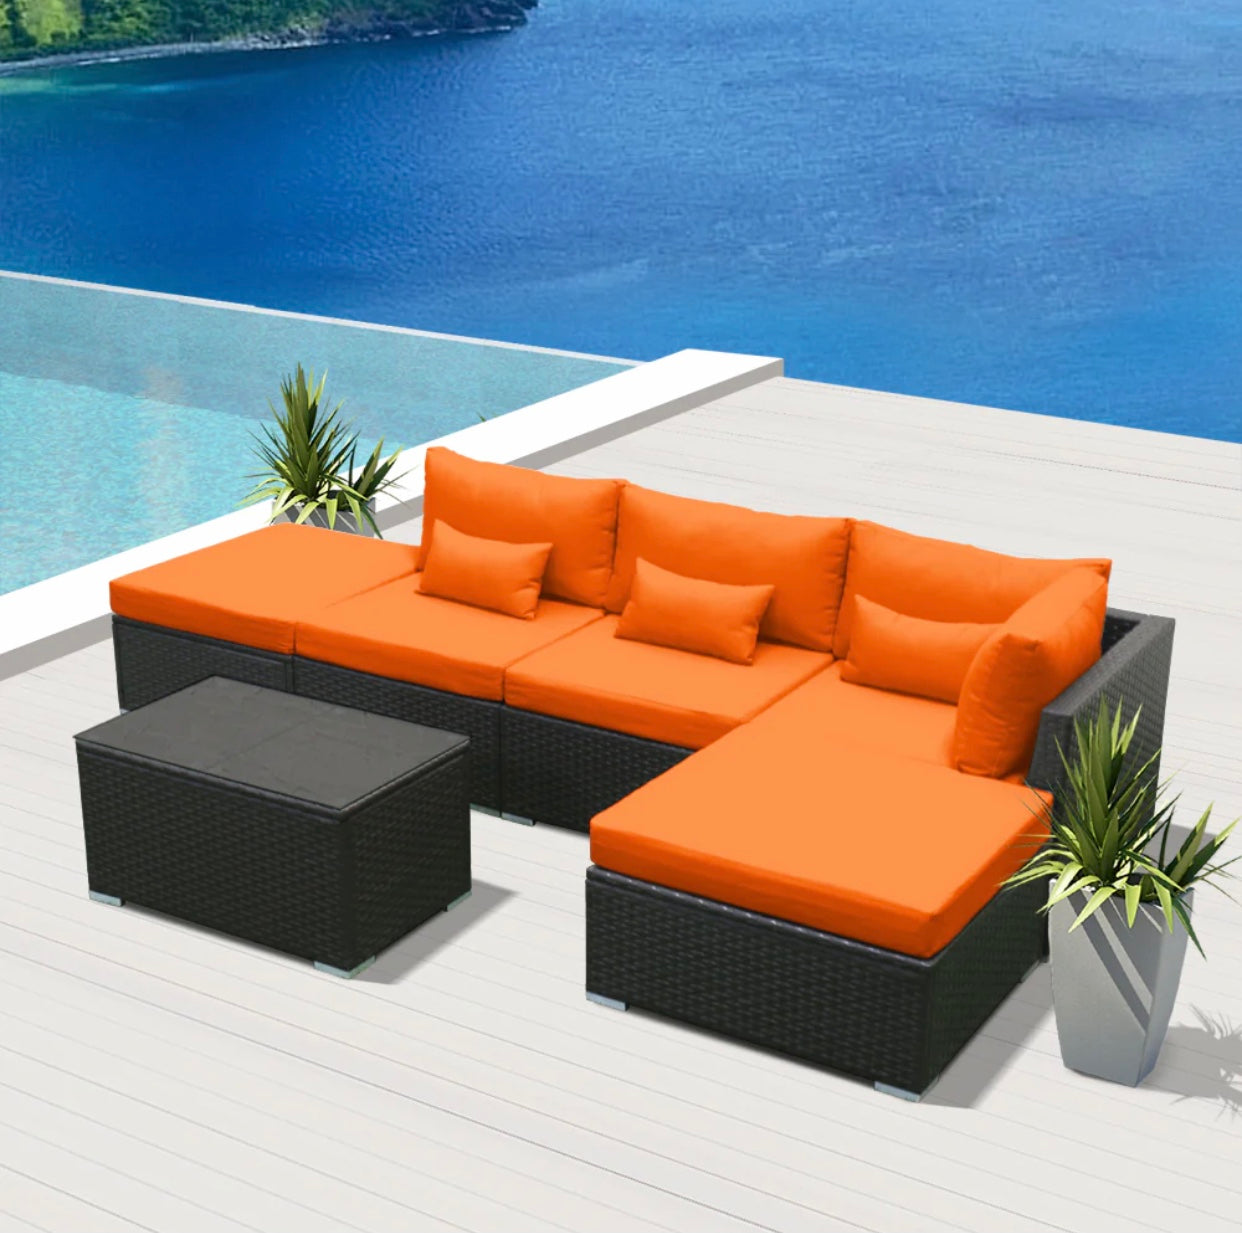 Orange Rattan Outdoor Garden Furniture Sets in 6 Pieces Six